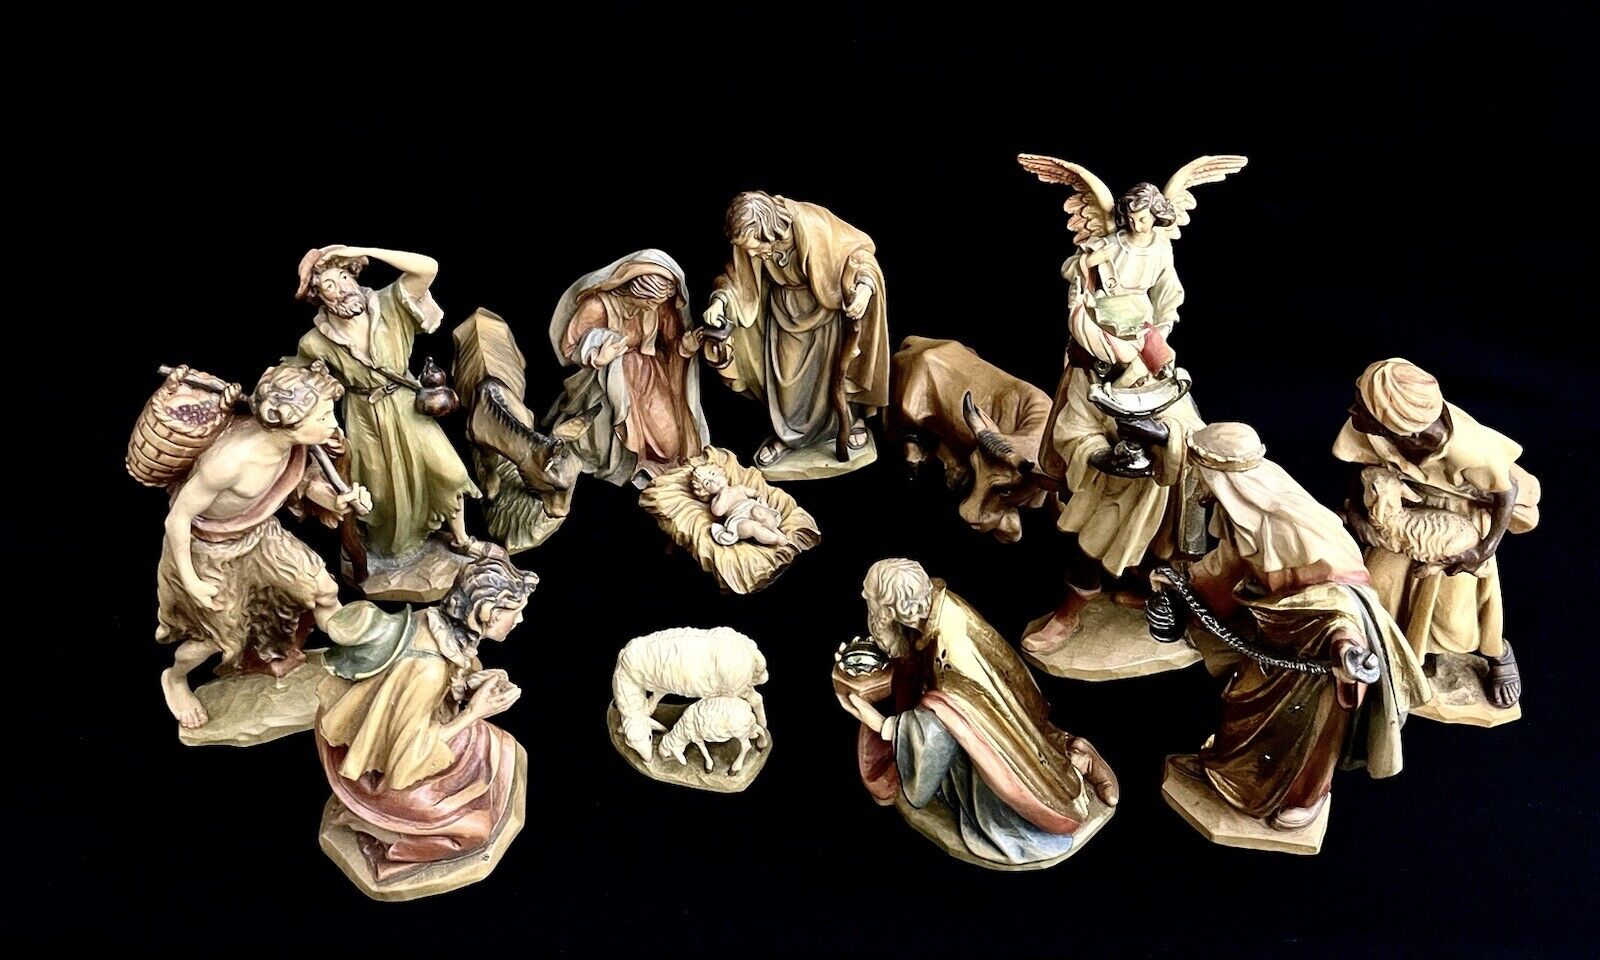 ~*~Gorgeous 8” Scale Anri Bernardi Nativity Set~*~